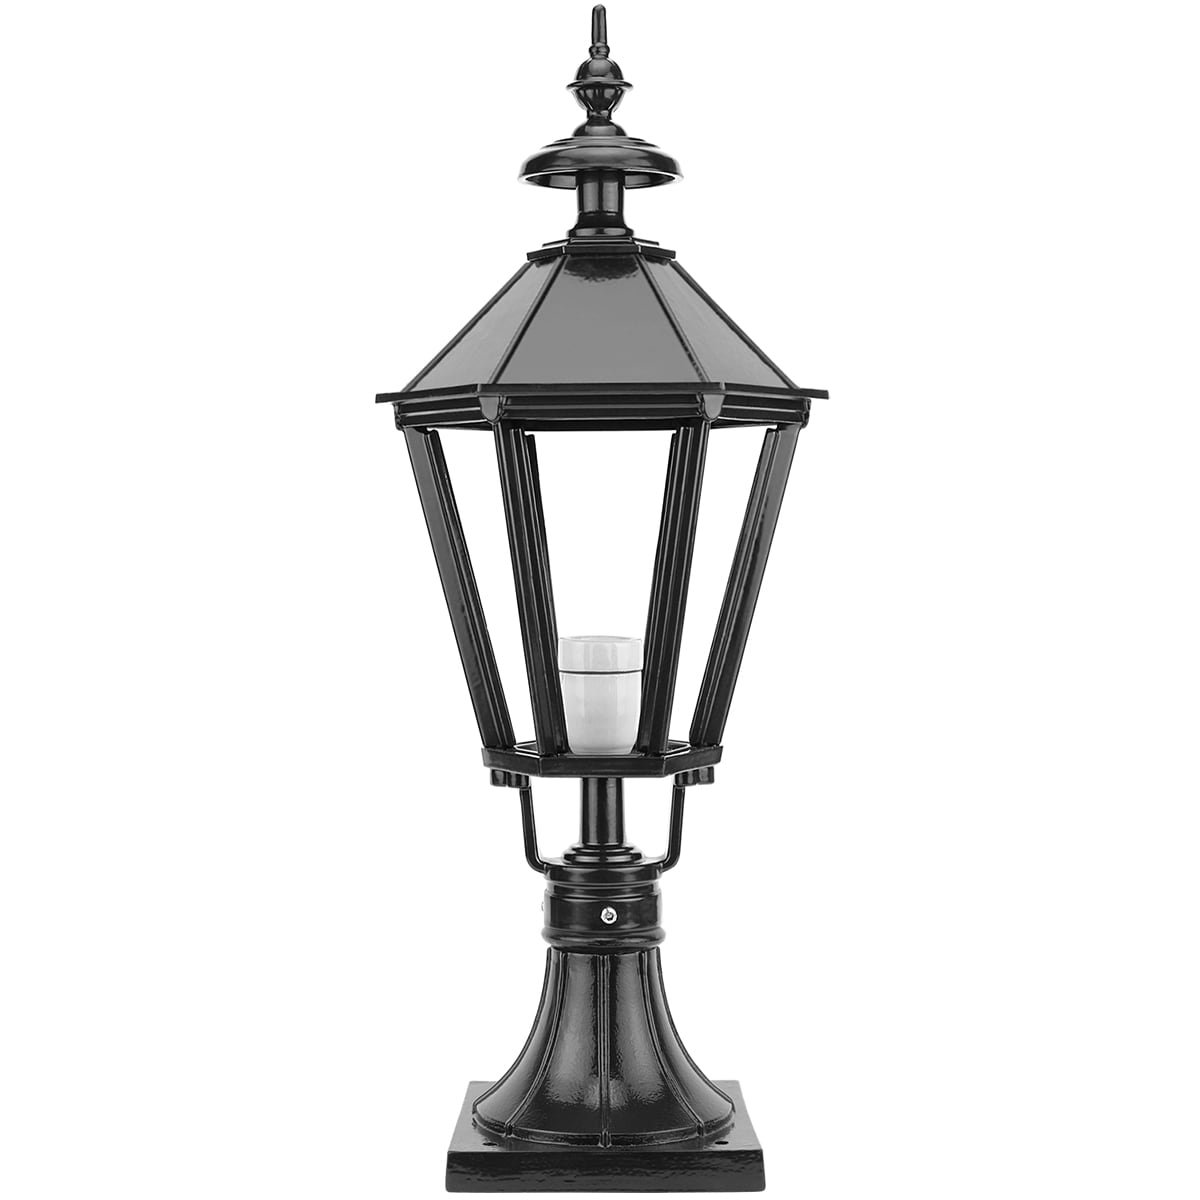 Pedestal lamp Maastricht L - 79 cm